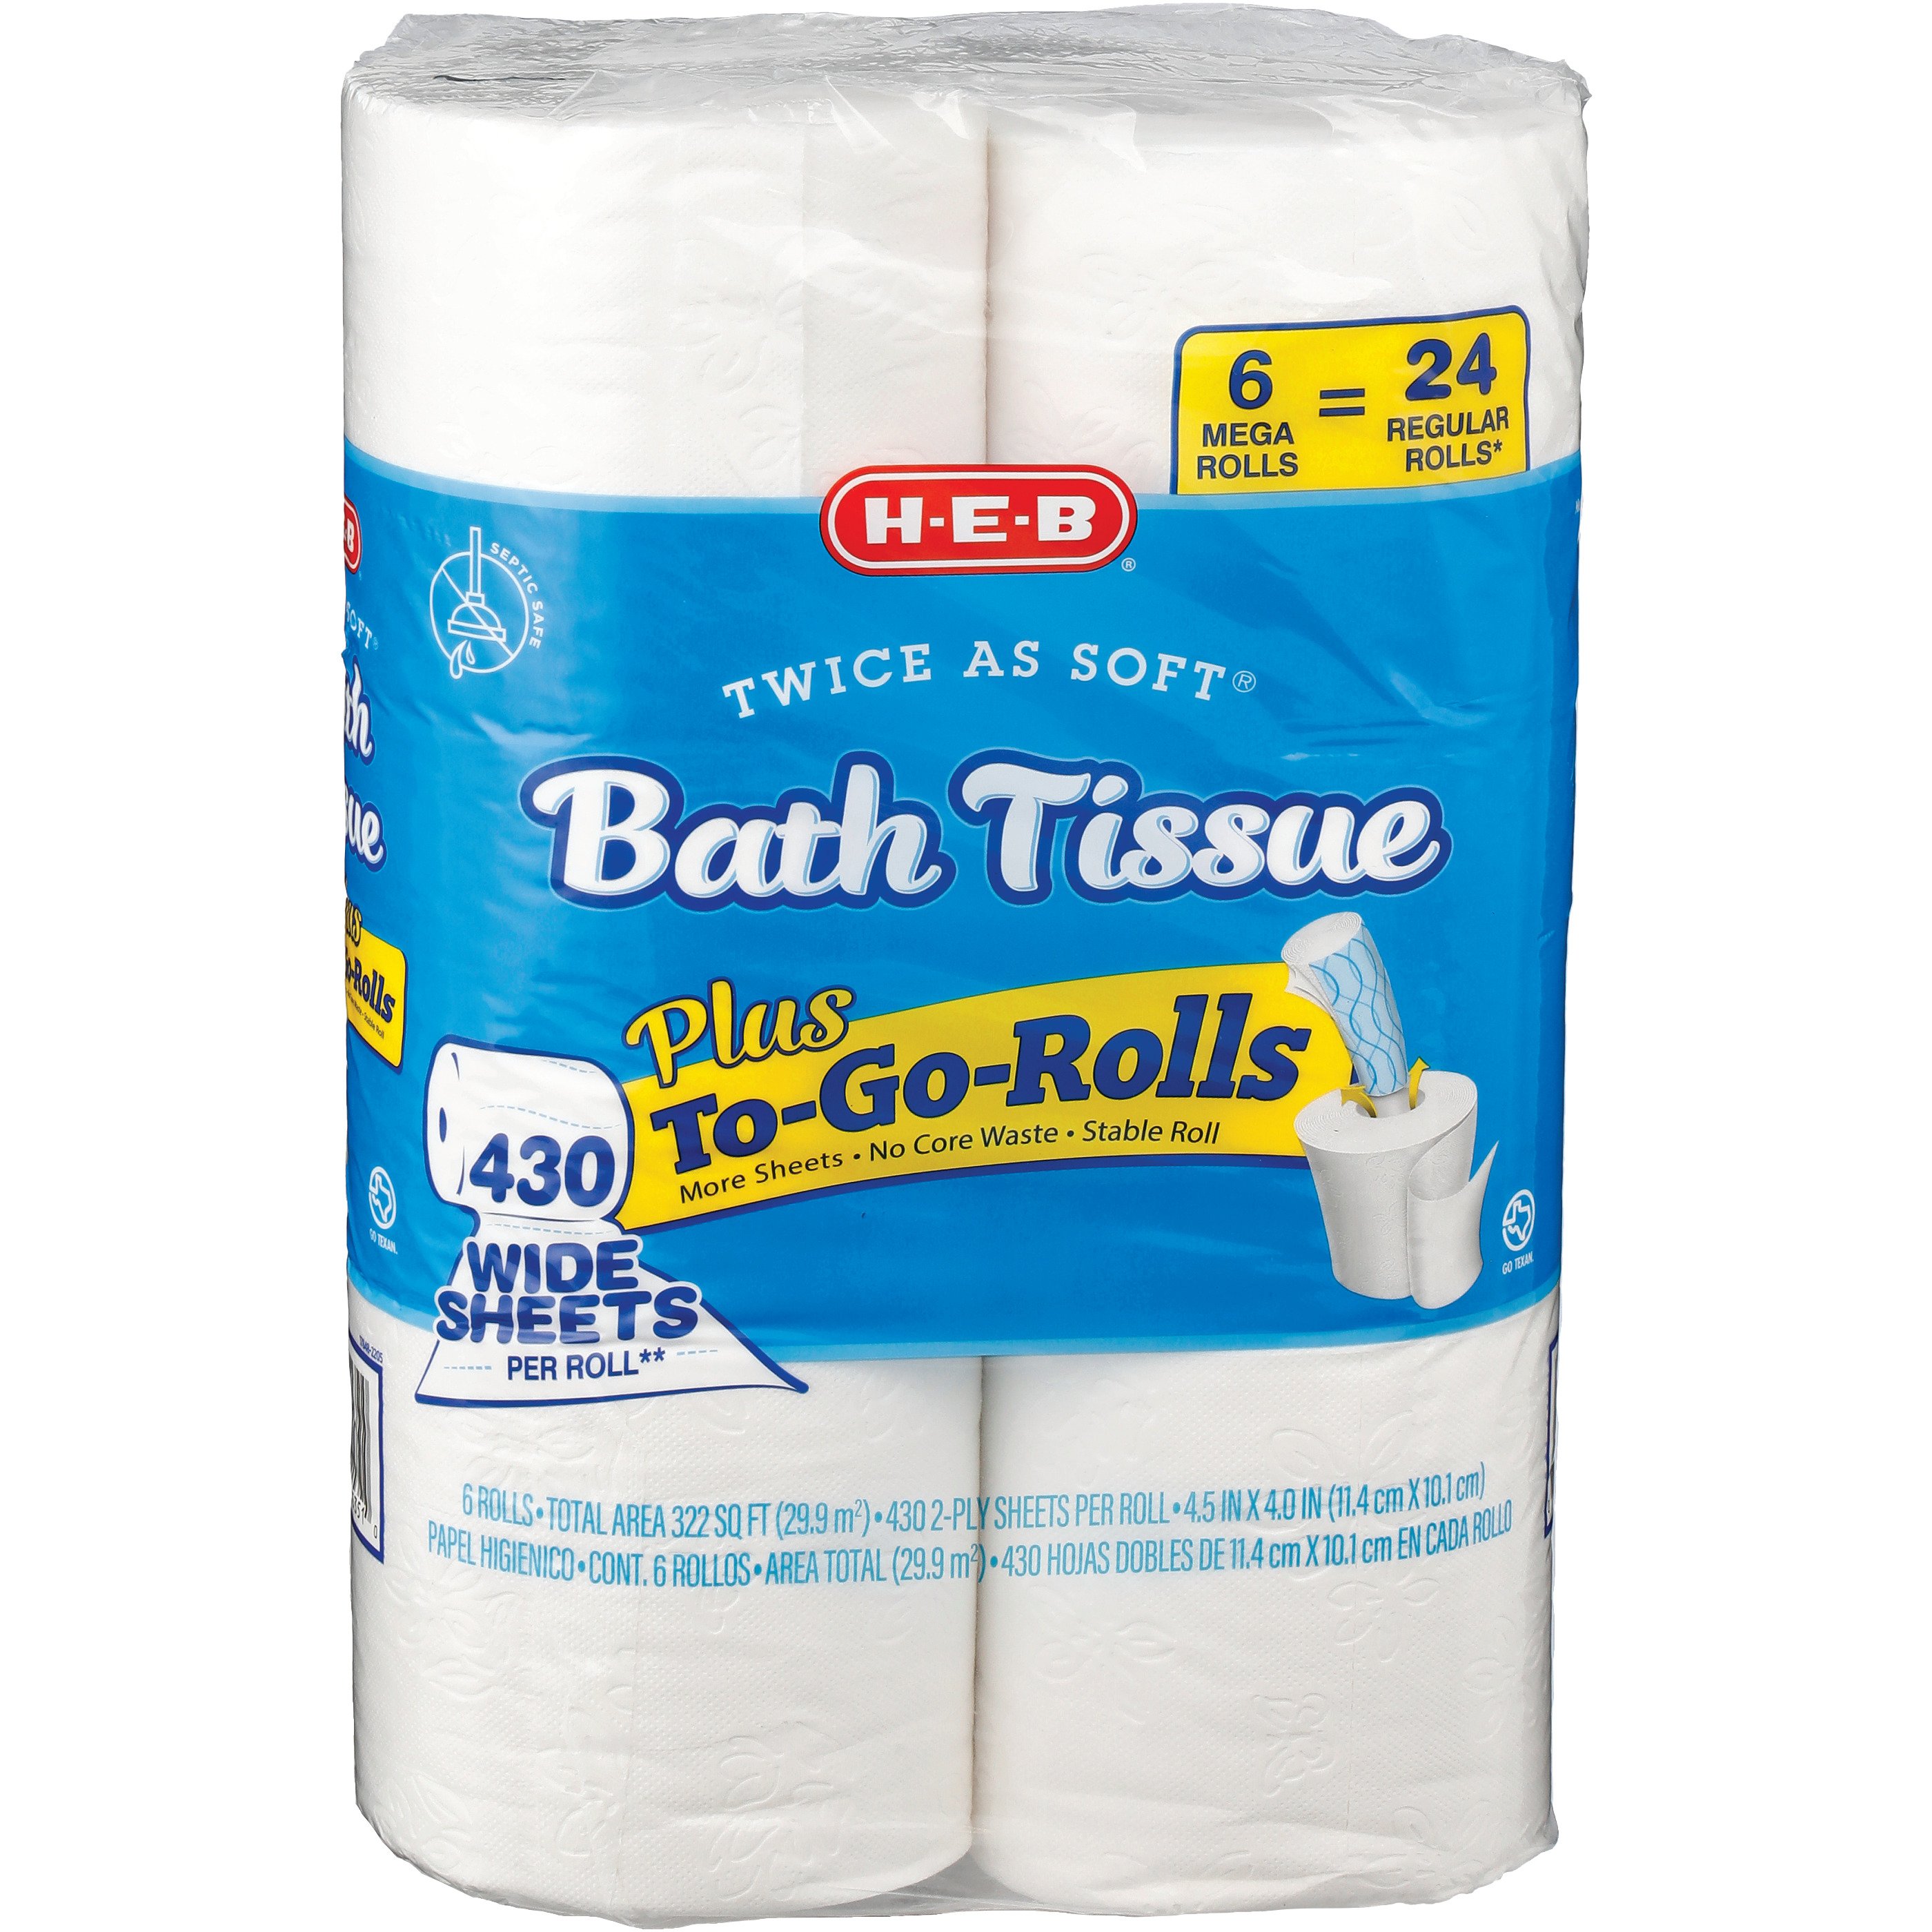 AMONG US con rollos de papel higiénico., AMONG US with toilet rolls.